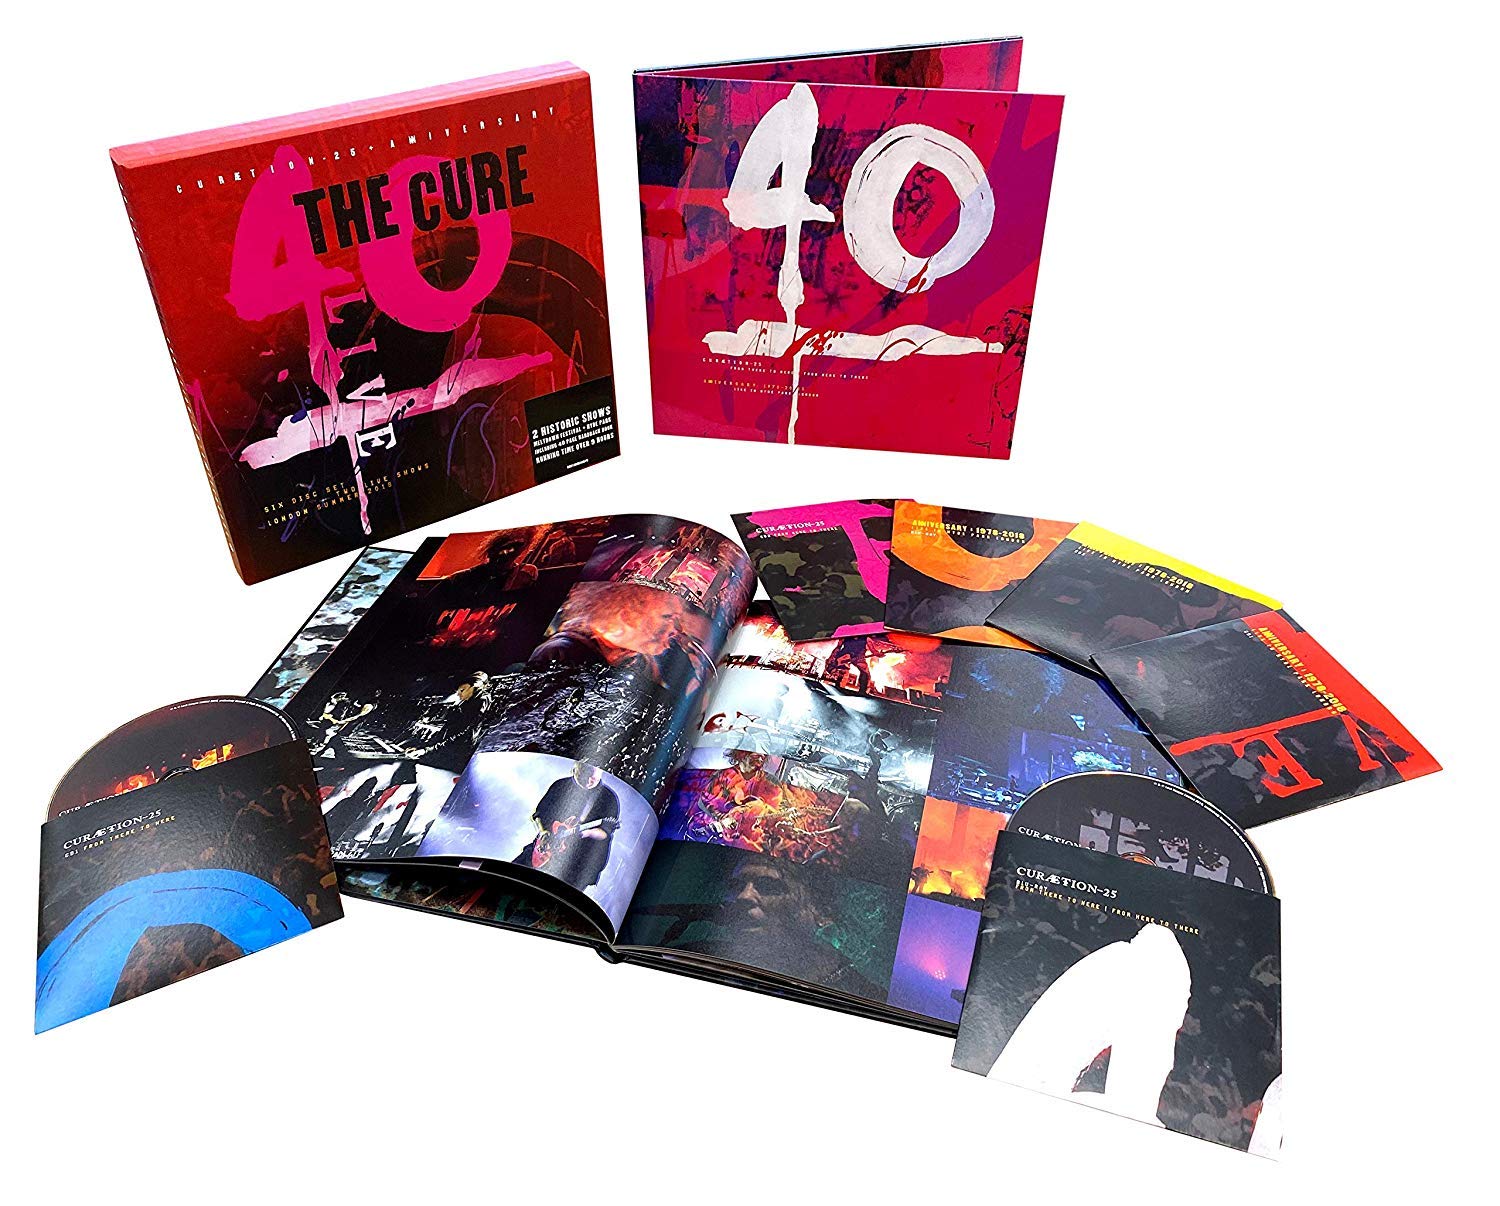 The Cure-40 Live Curaetion 25 Anniversary-(EREDV1367)-BOXSET-4CD-FLAC-2019-WRE